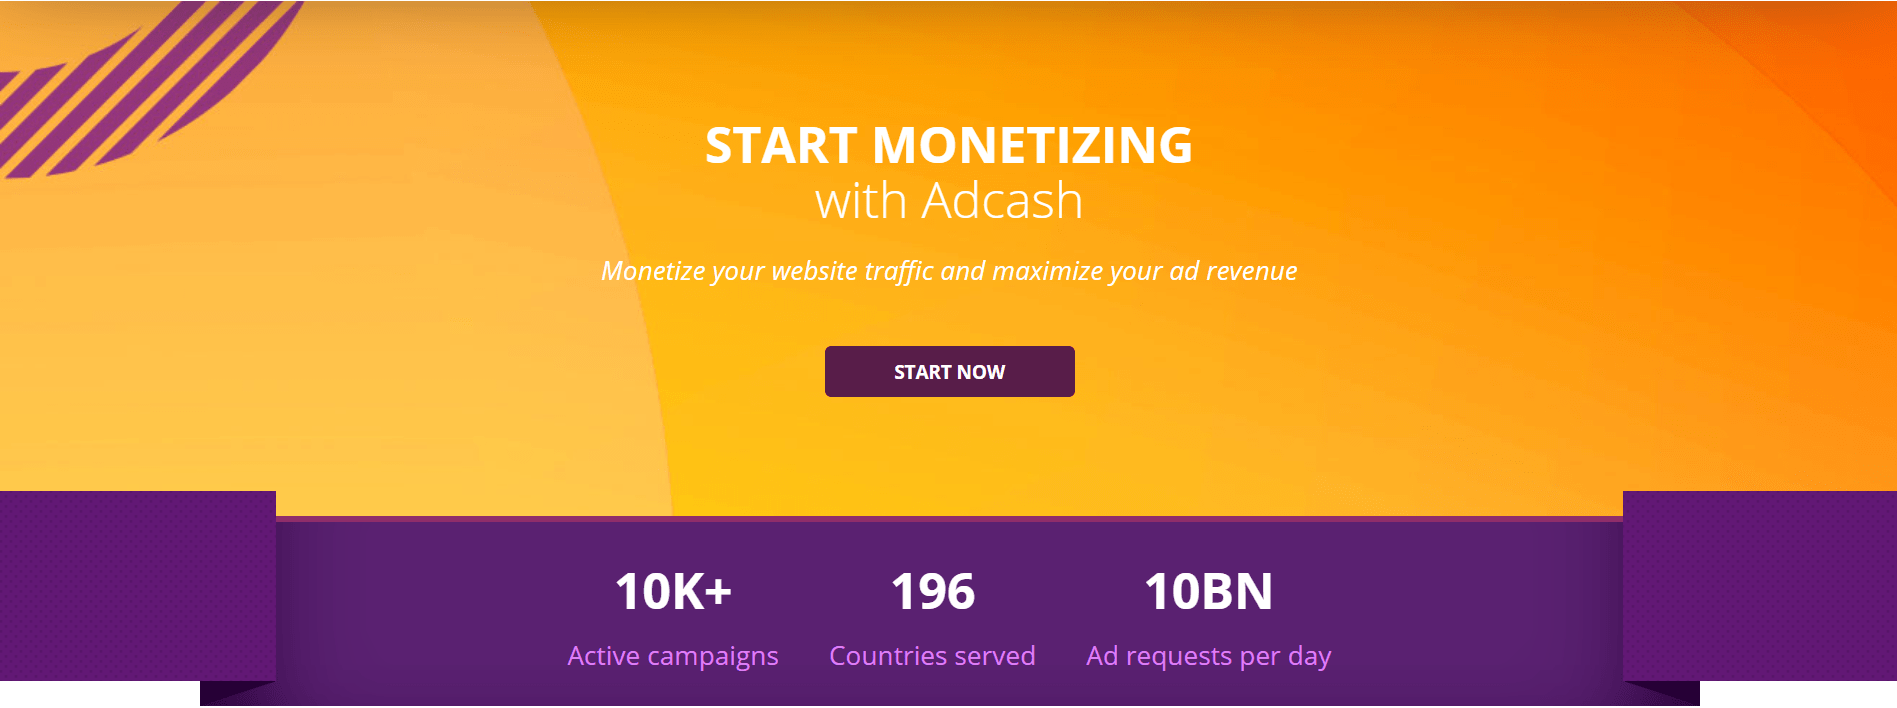 AdCash Review - Start Monetizing